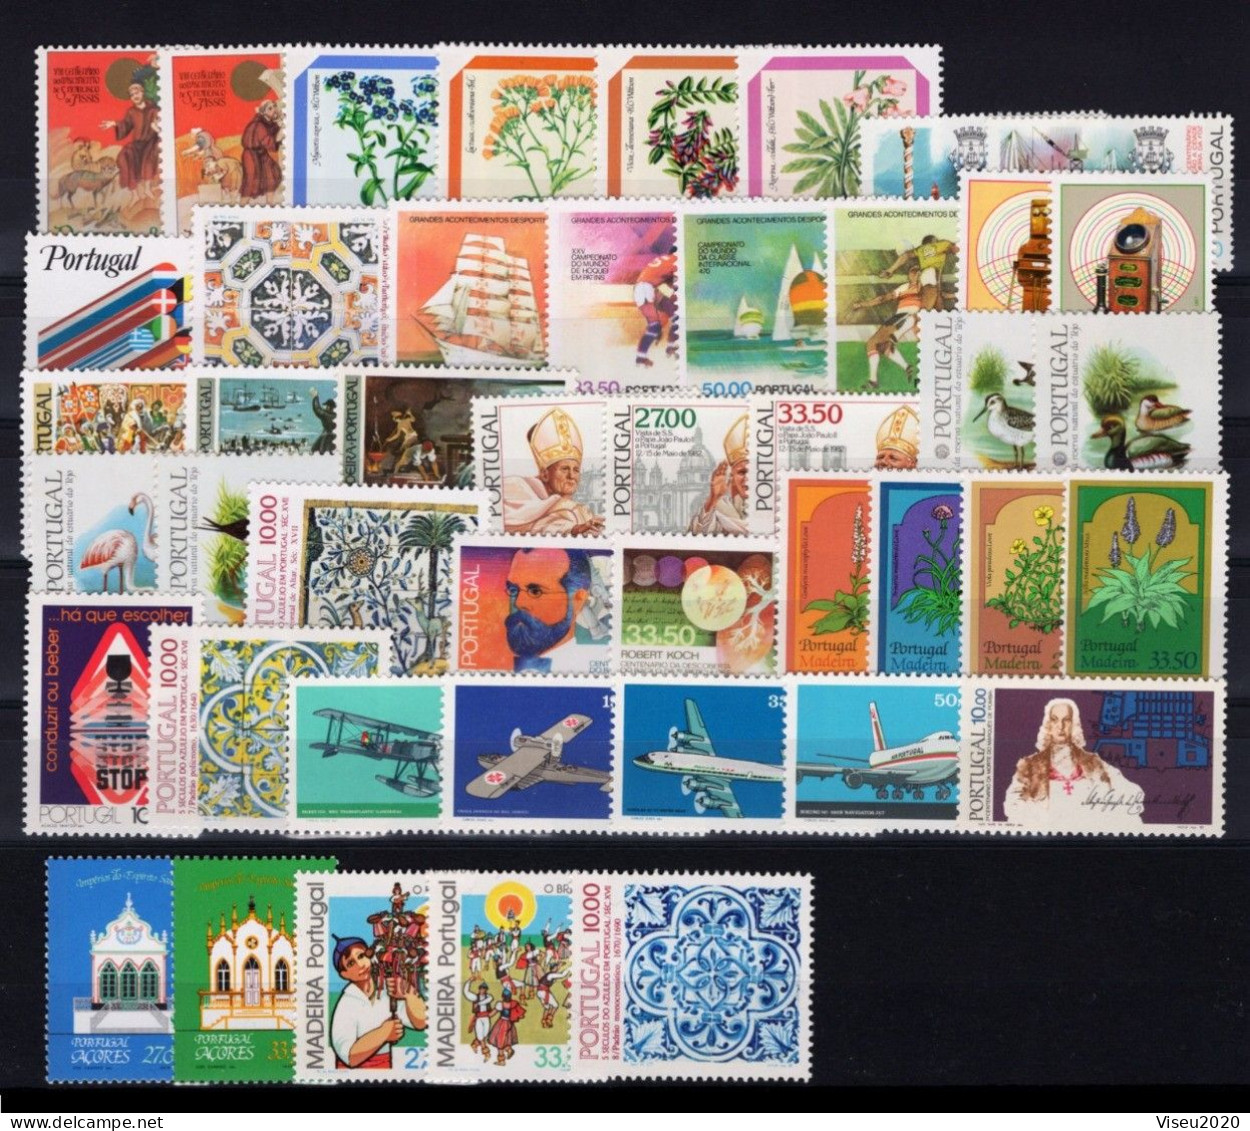 1982 Portugal Azores Madeira Complete Year MNH Stamps. Année Compléte NeufSansCharnière. Ano Completo Novo Sem Charneira - Années Complètes